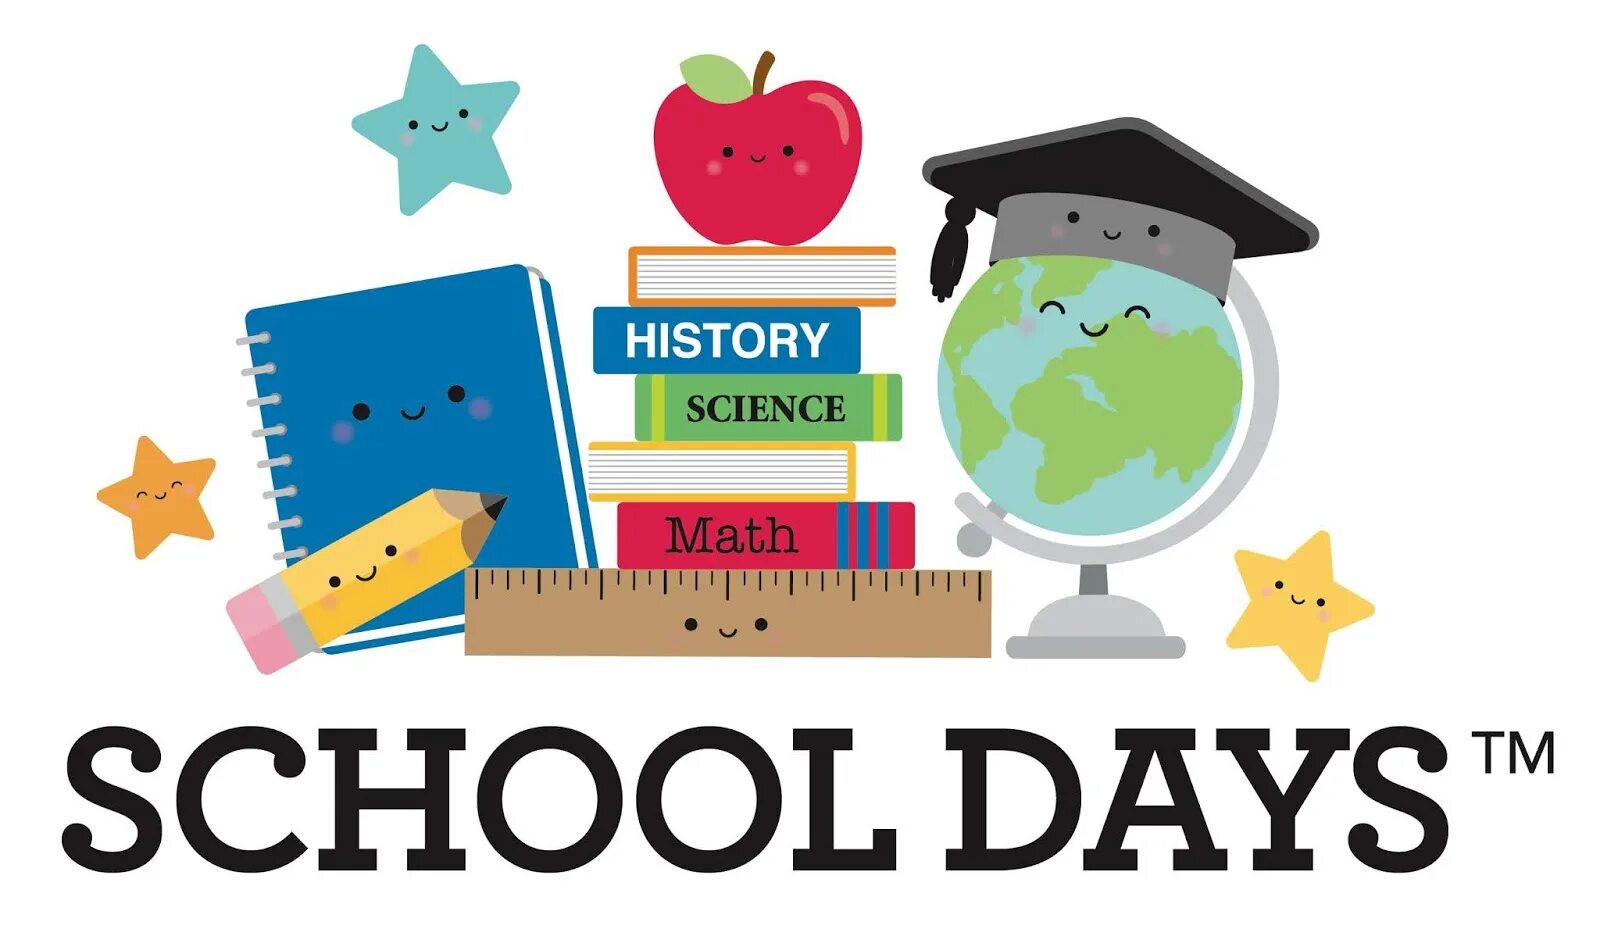 Your school day. Our School Day. My School logo. Day at New School. School Day cartoon story.